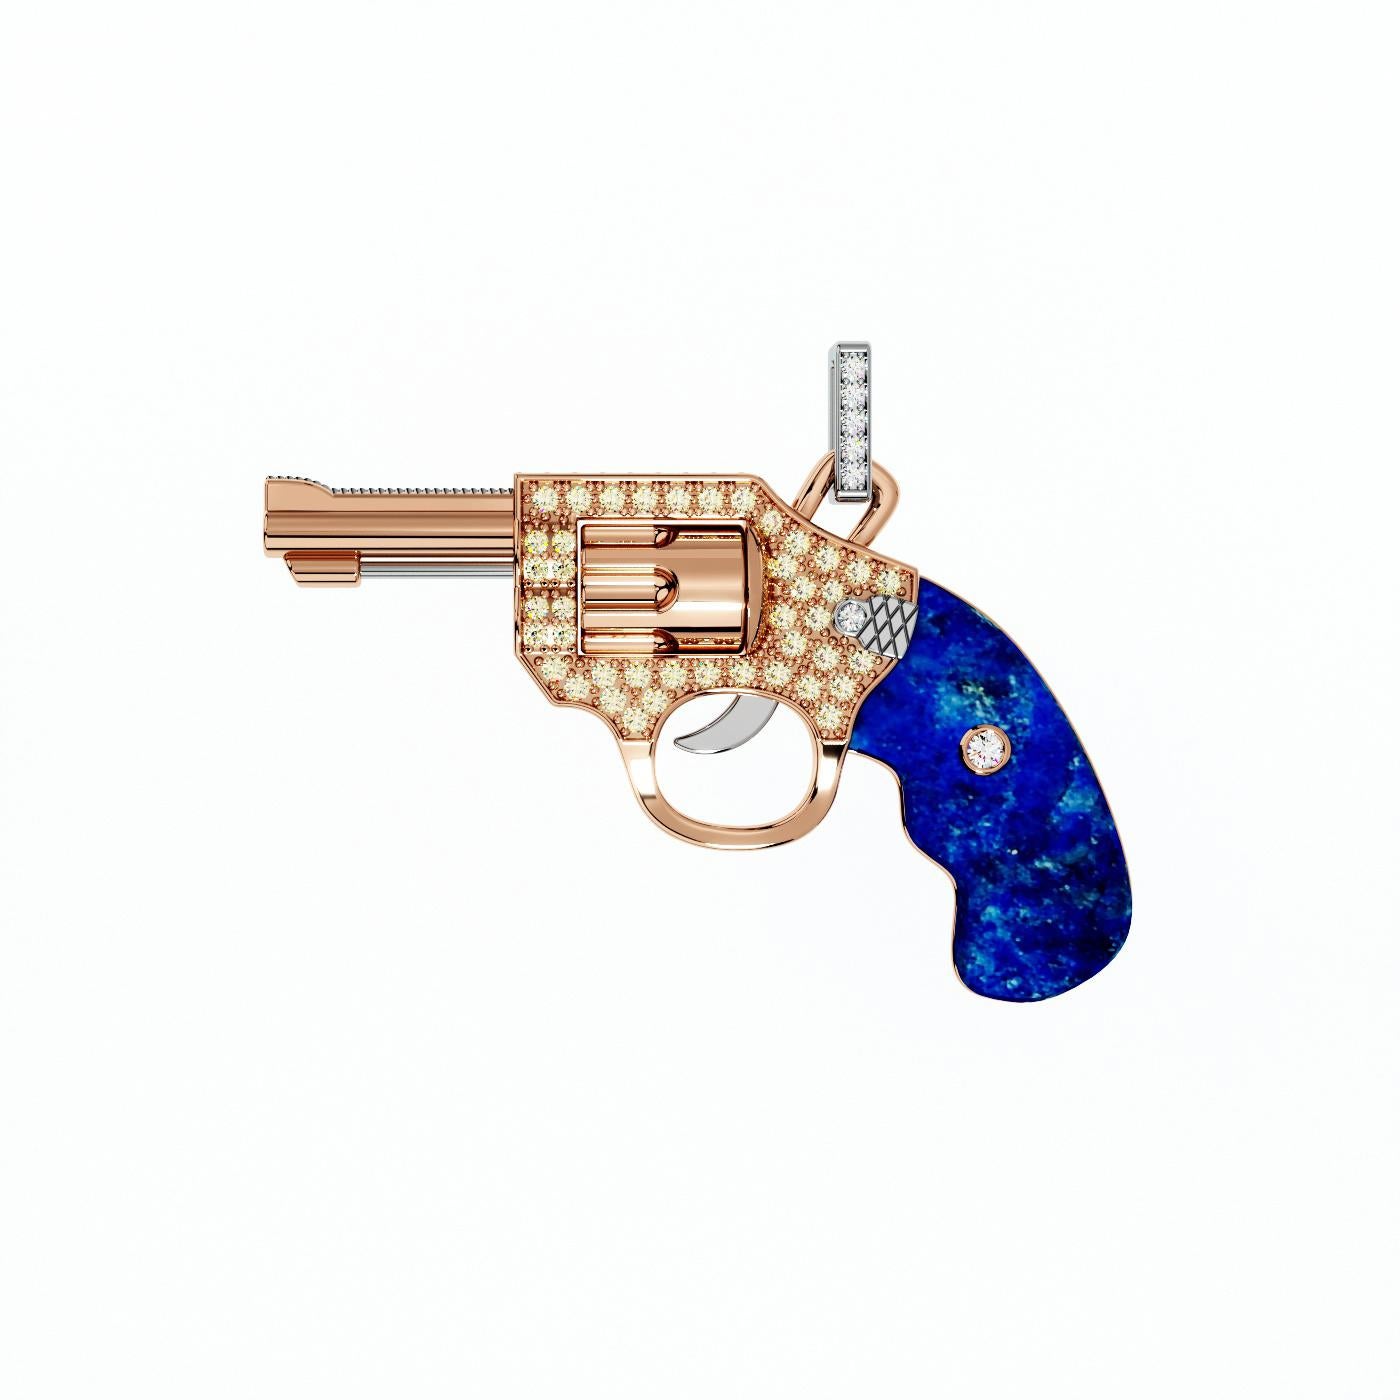 Diamond Gun Revolver Lapis Lazuli Gem 18 Karat Rose Gold Necklace Pendant Charm
18 Karat Gold
Genuine Lapis Lazuli Stone & Natural Diamonds 0.50 CTW
Approximate Mini Peacemaker Length: 1.3” inches / 3.3 centimeters
Approximate Chain Length: